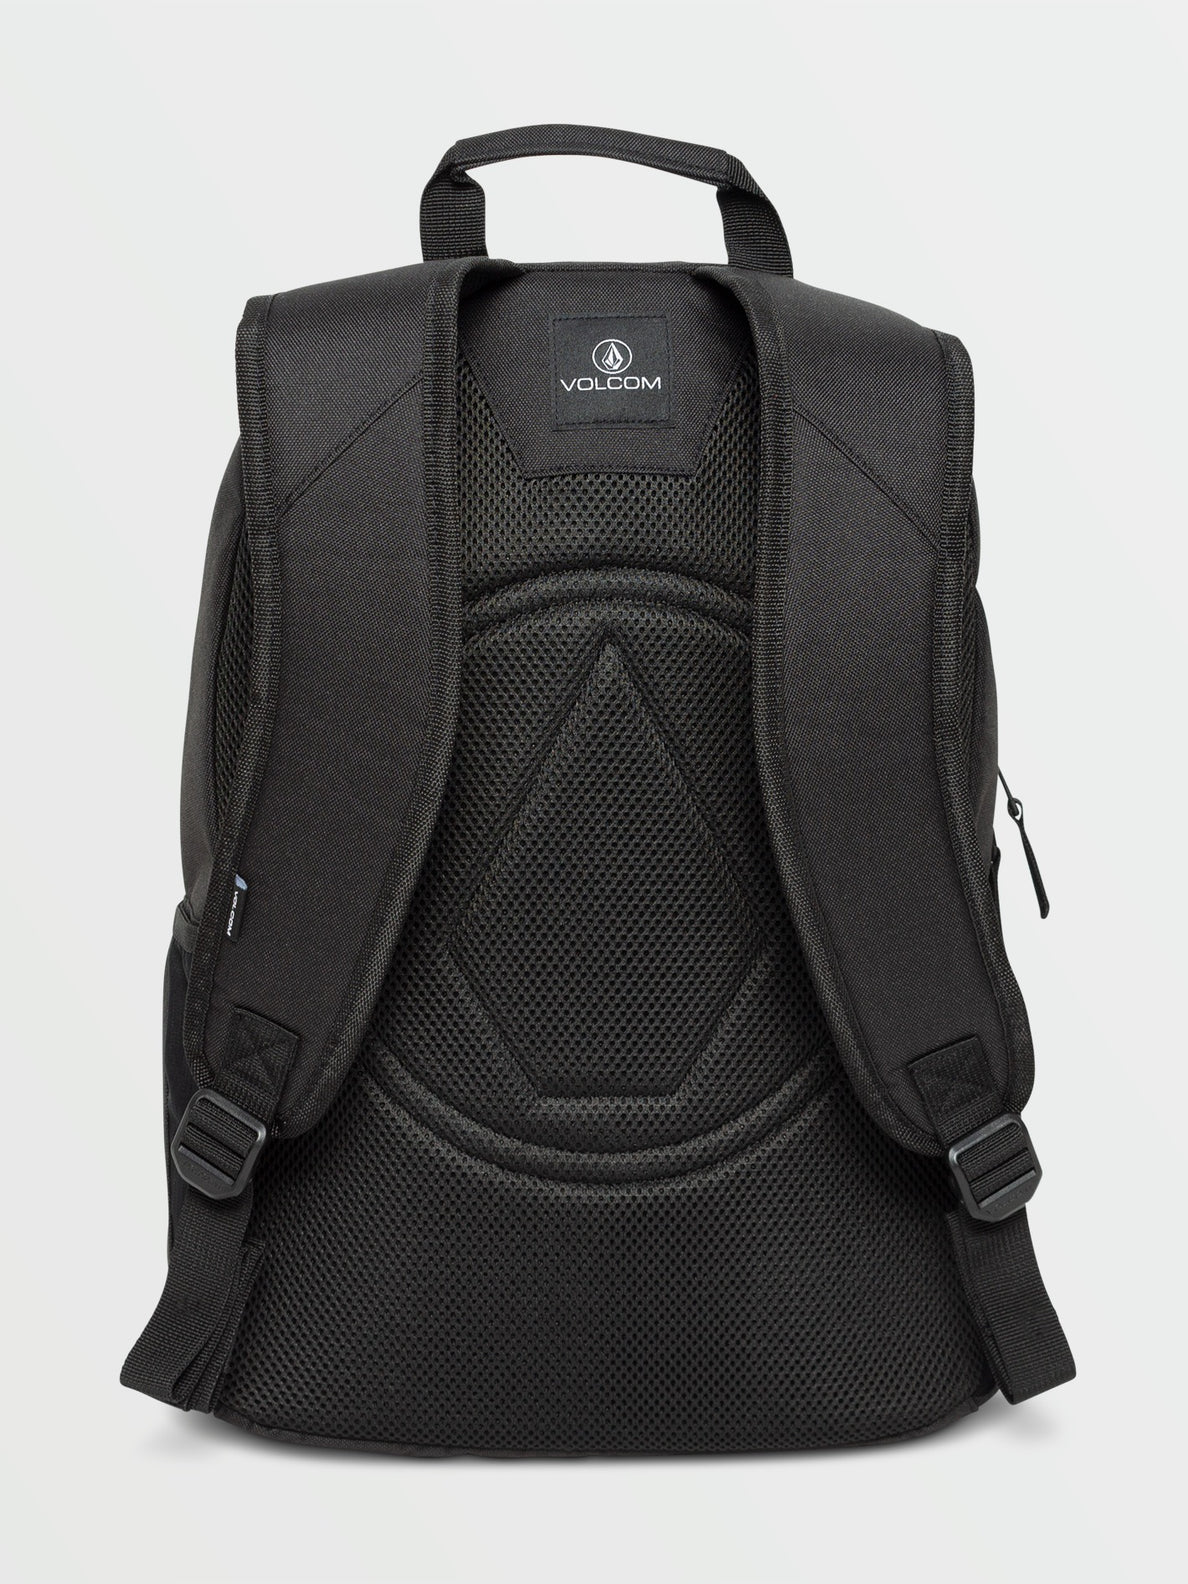 Upperclass Backpack - Black